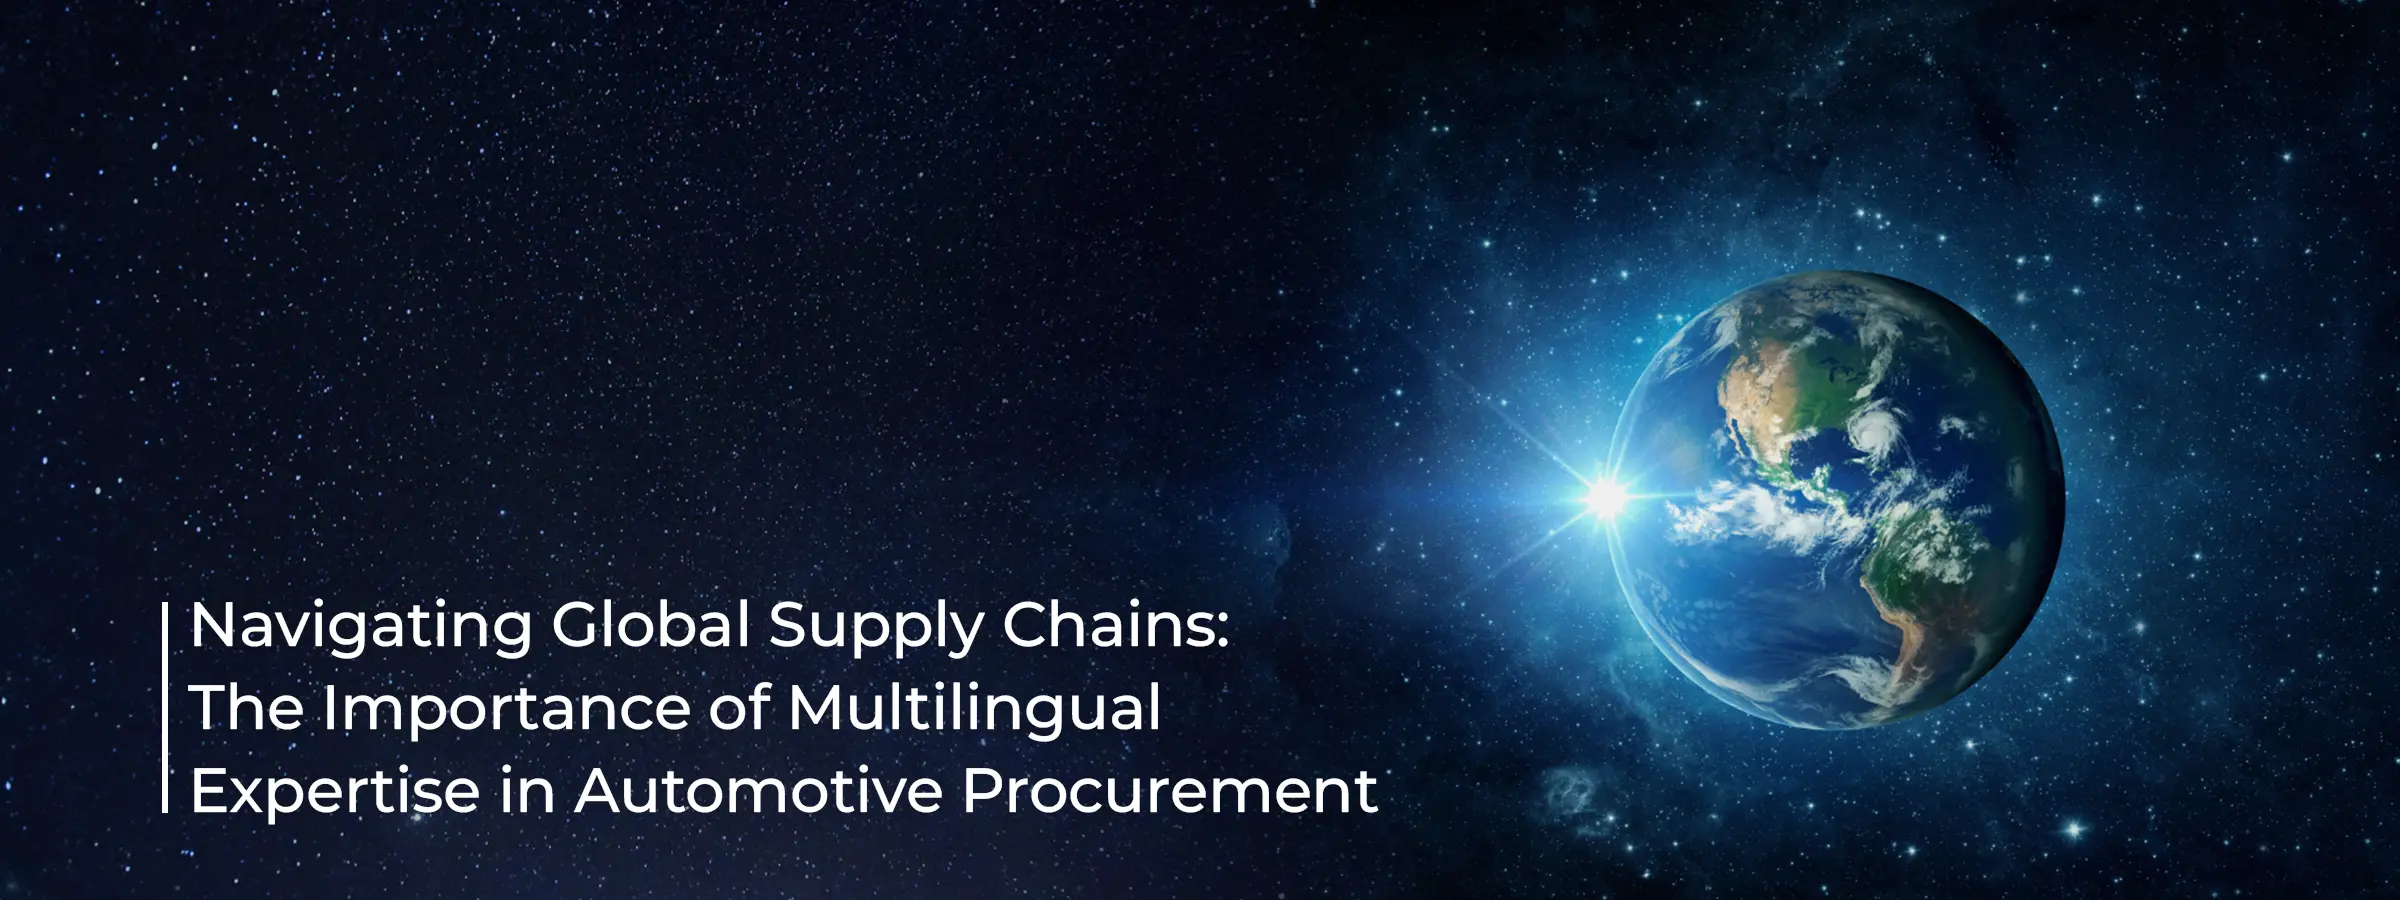 importance-of-multilingual-expertise-in-automotive-procurement